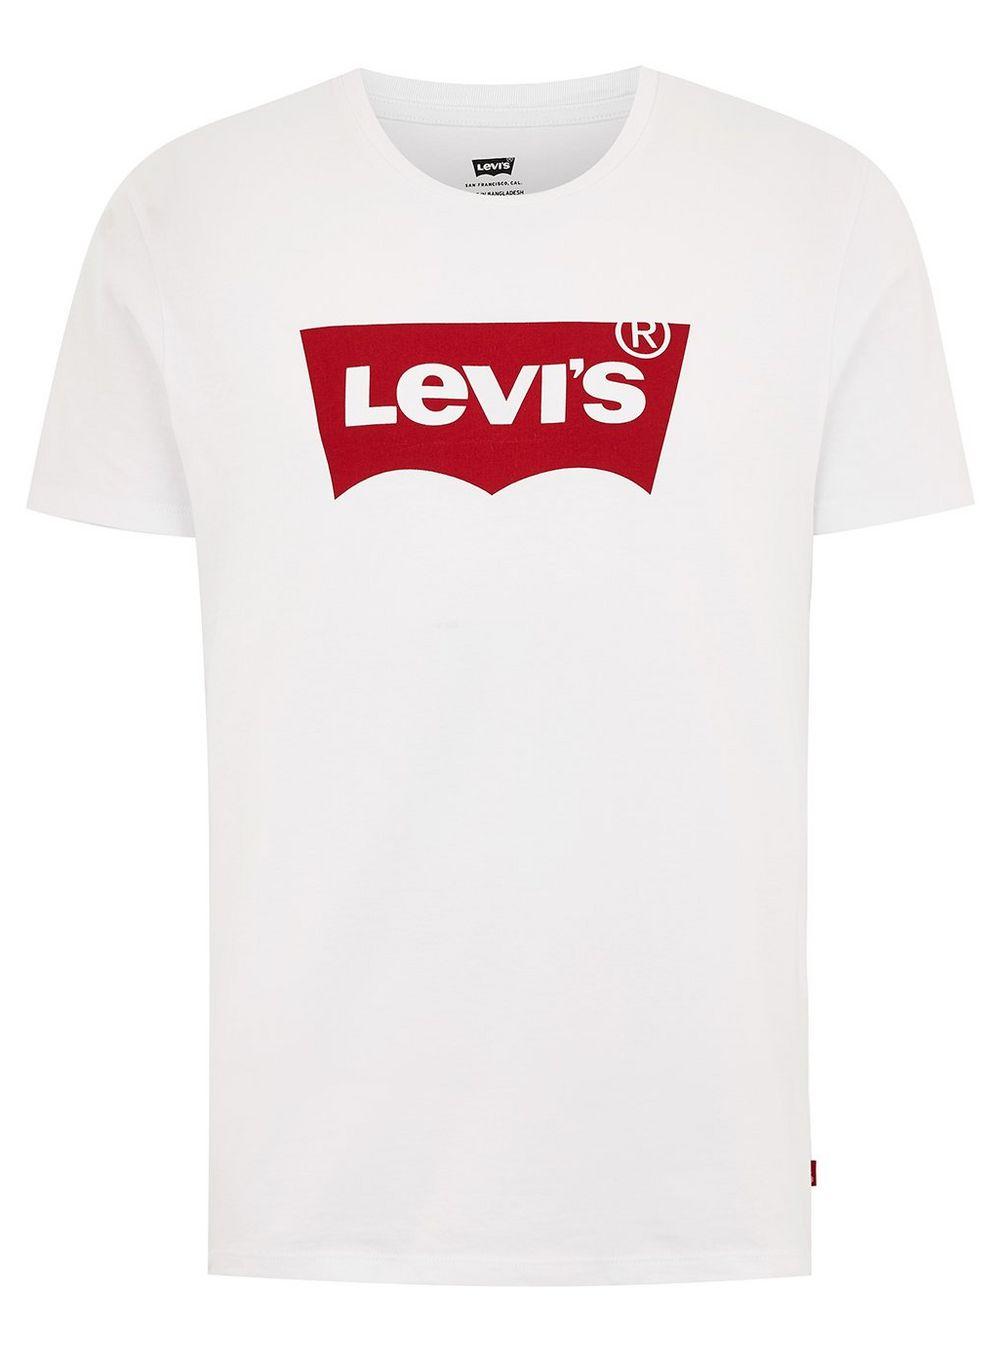 Shirt Logo - LEVI'S White Logo T Shirt